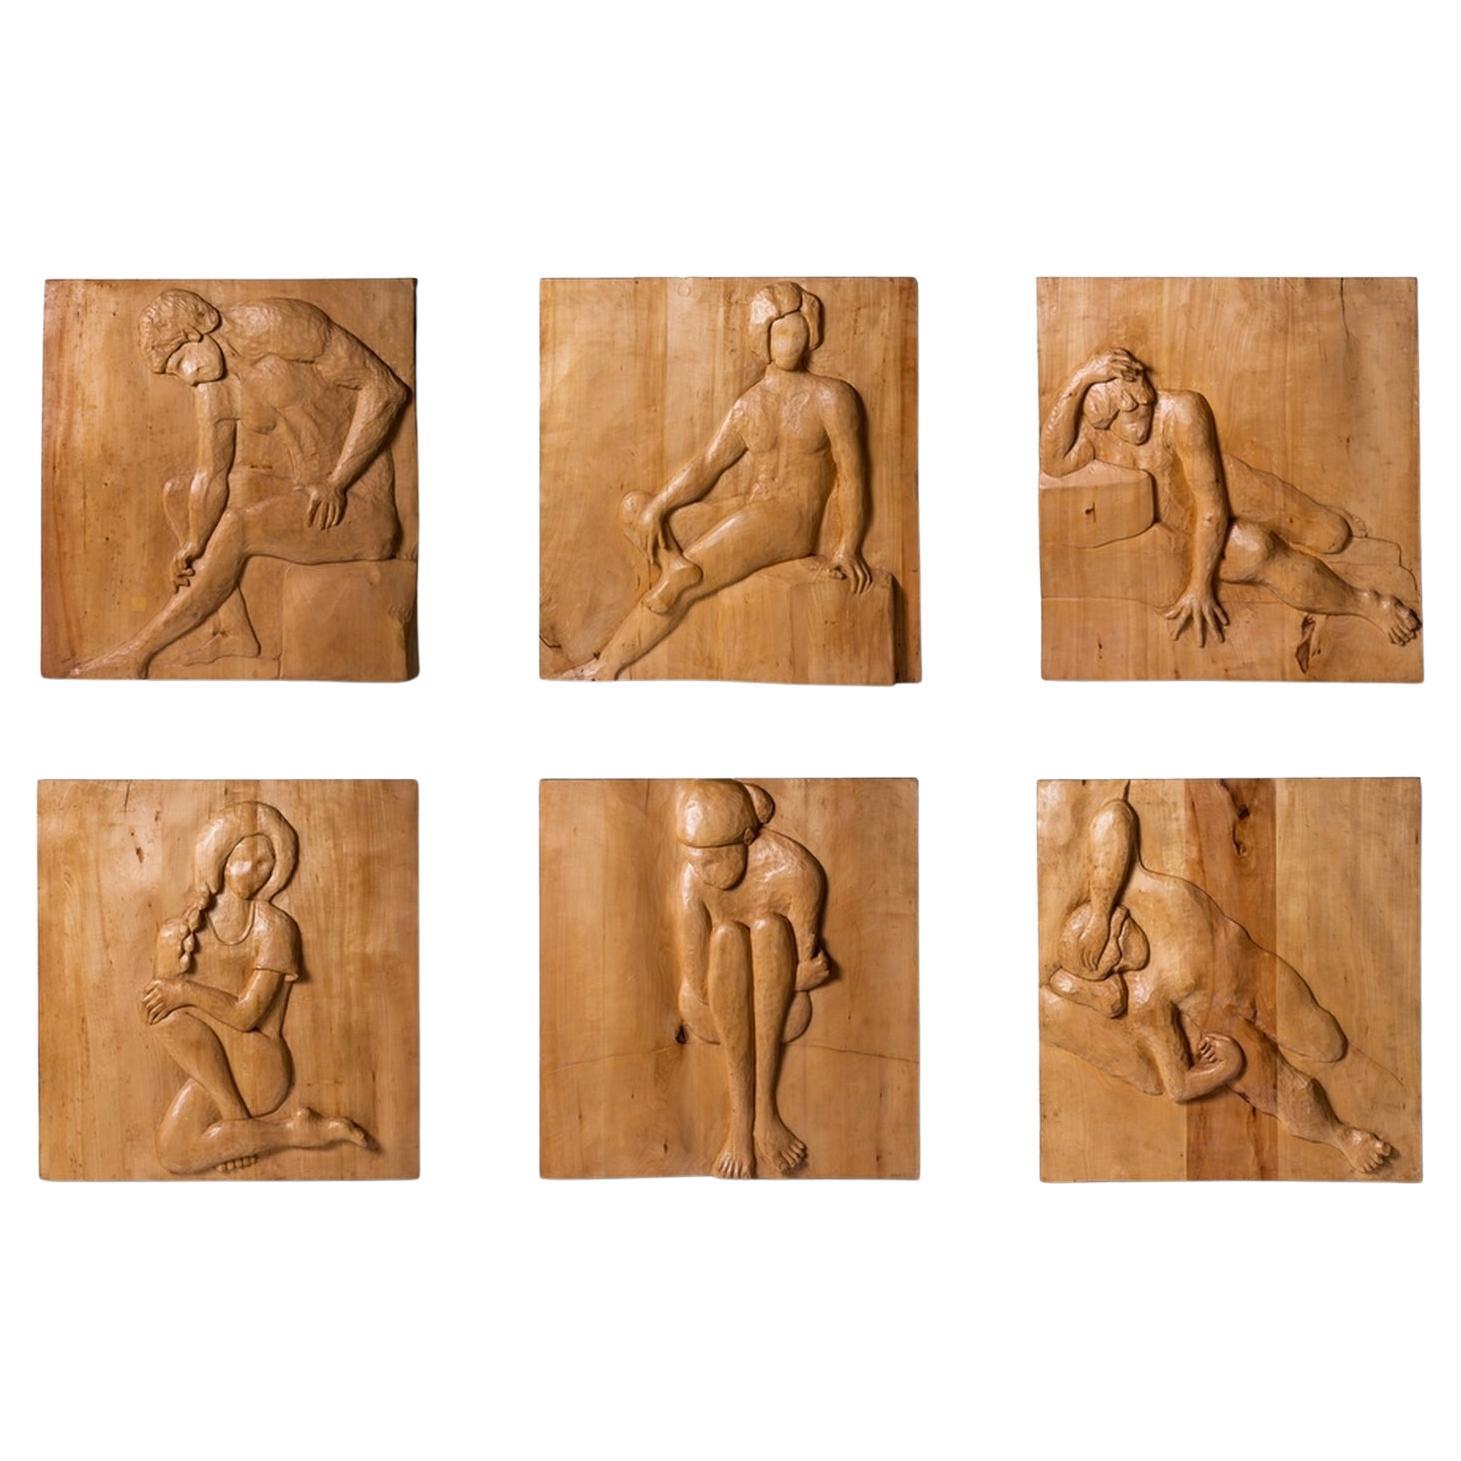 Sechs dekorative Tafeln, geschnitztes Holz in niedrigem Relief